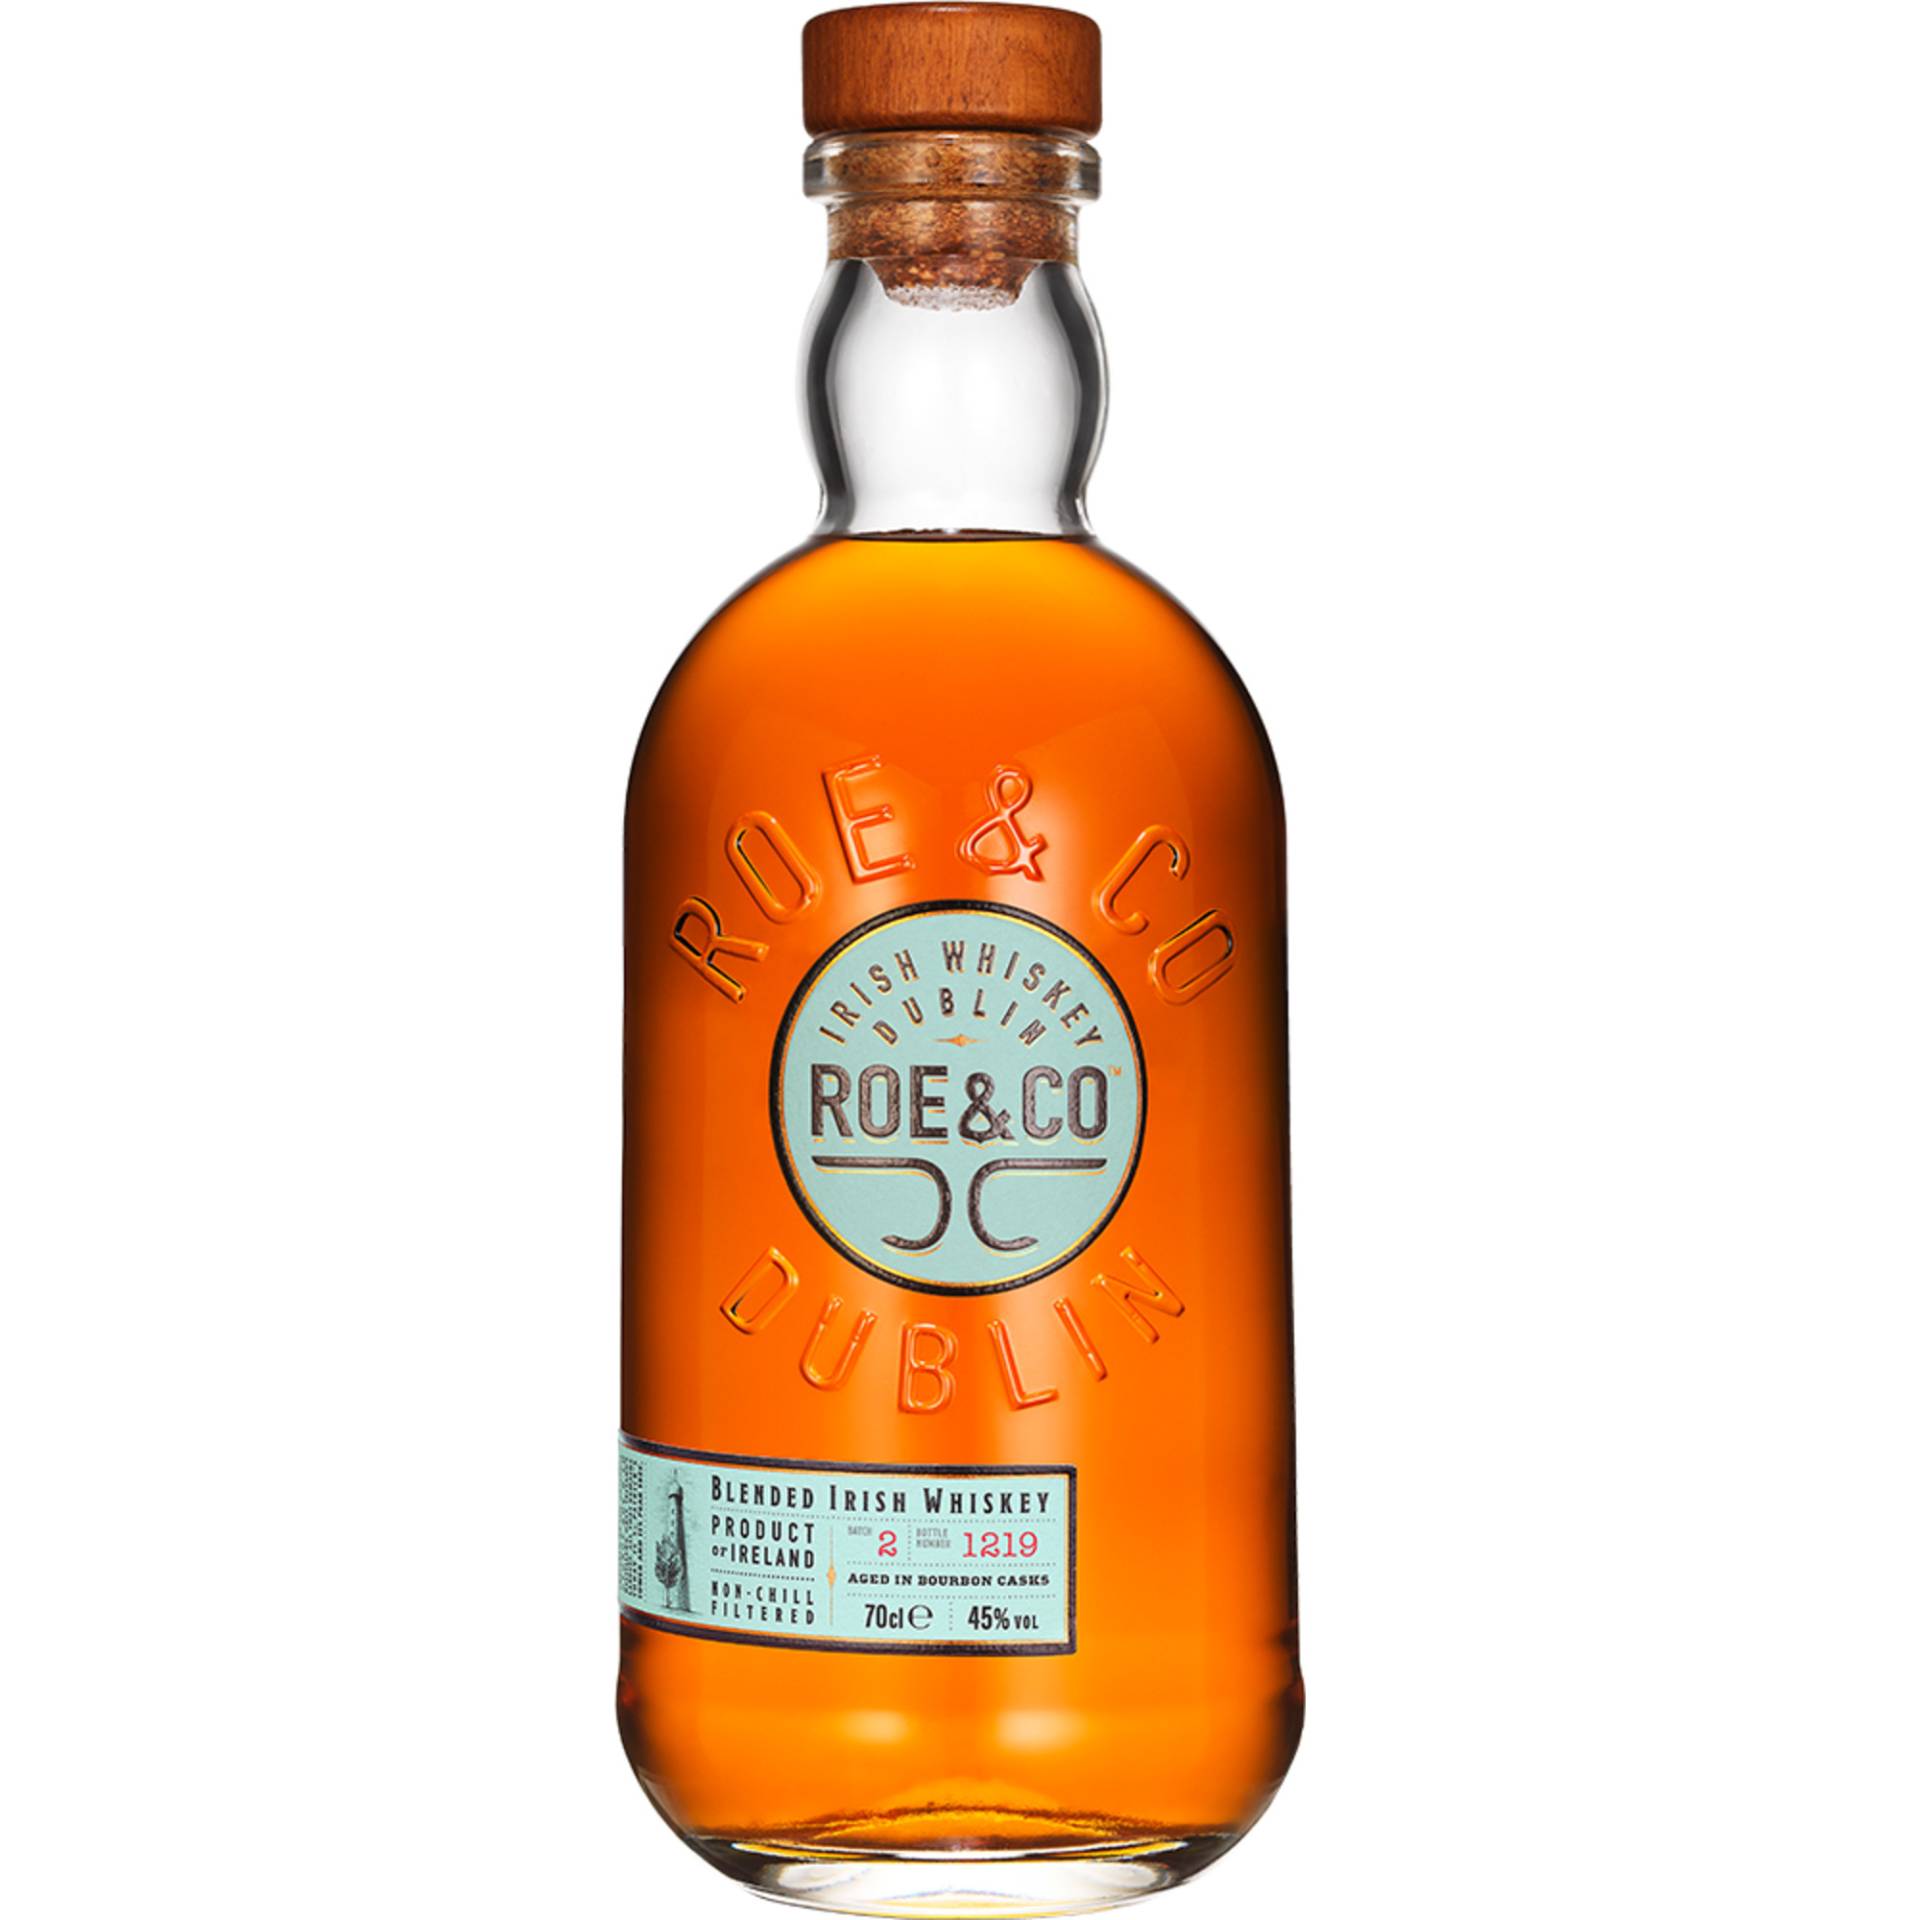 Roe & Co Blended Irish Whiskey, 0,7 L, 45% Vol., Spirituosen von Roe & Co., Nangor Road, Dublin 12, D12 F726, Ireland